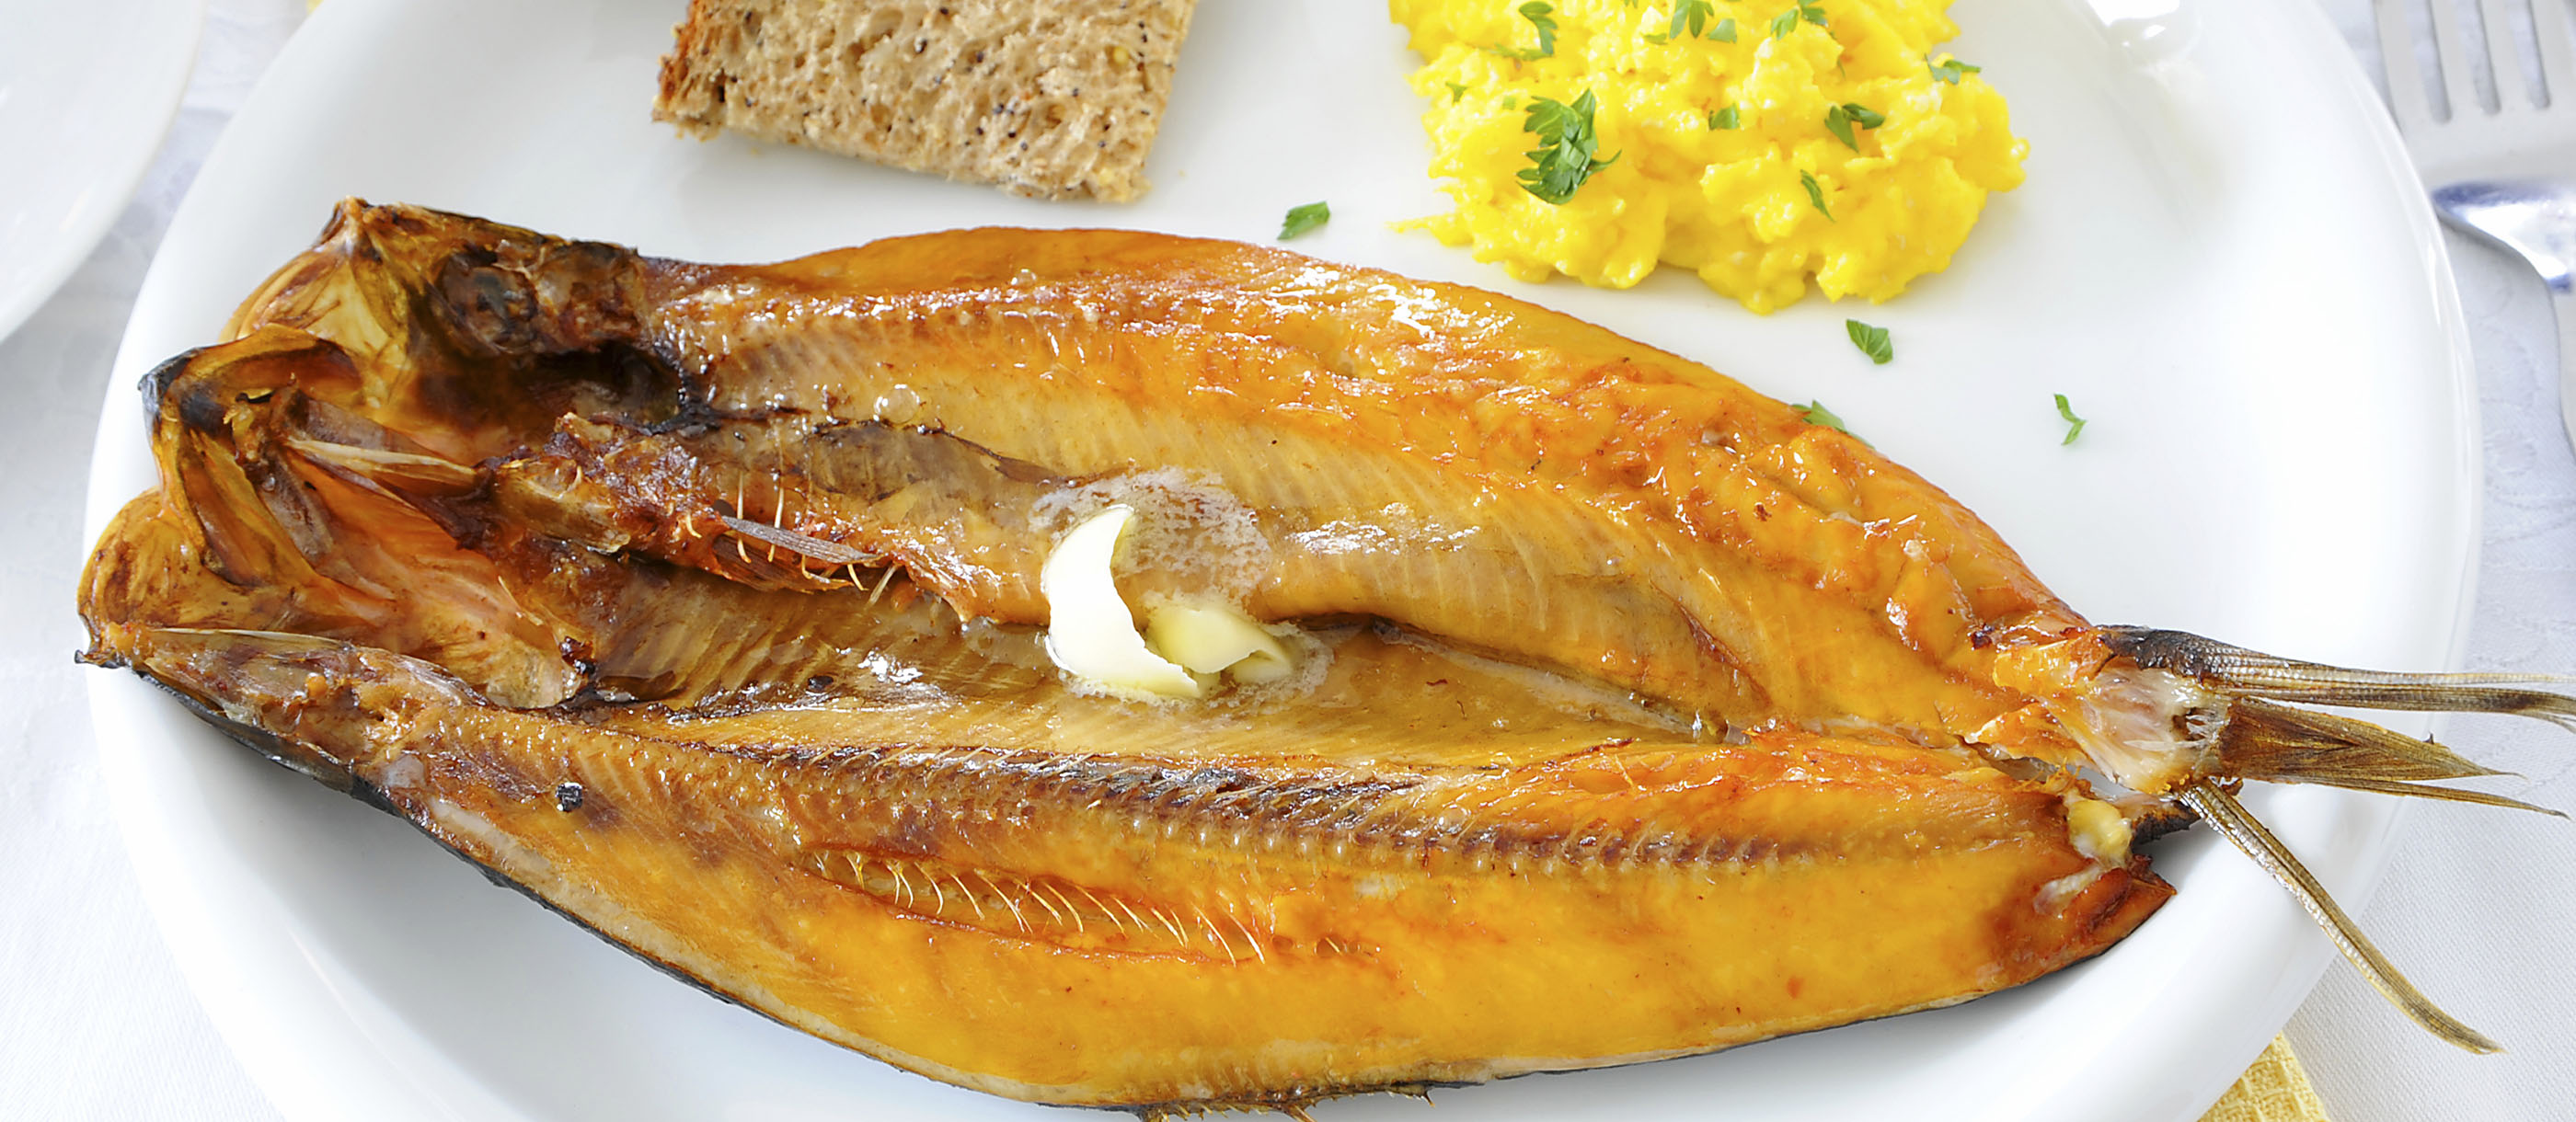 10 Most Popular British Fish Dishes - TasteAtlas